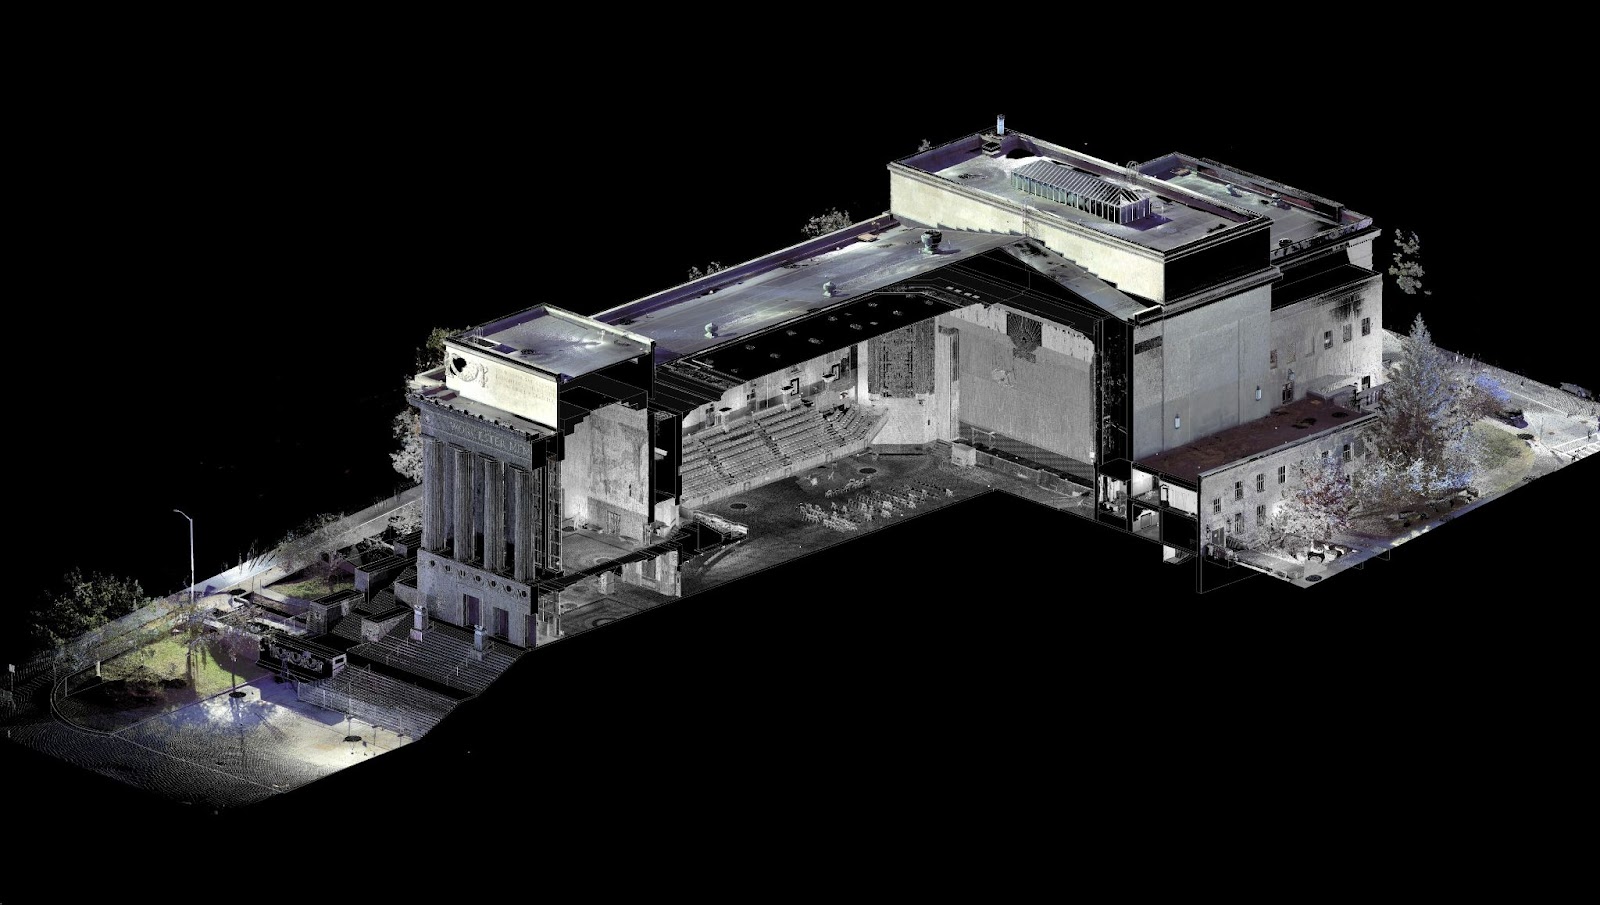 Laser scan data in color of the Worcester Memorial Auditorium